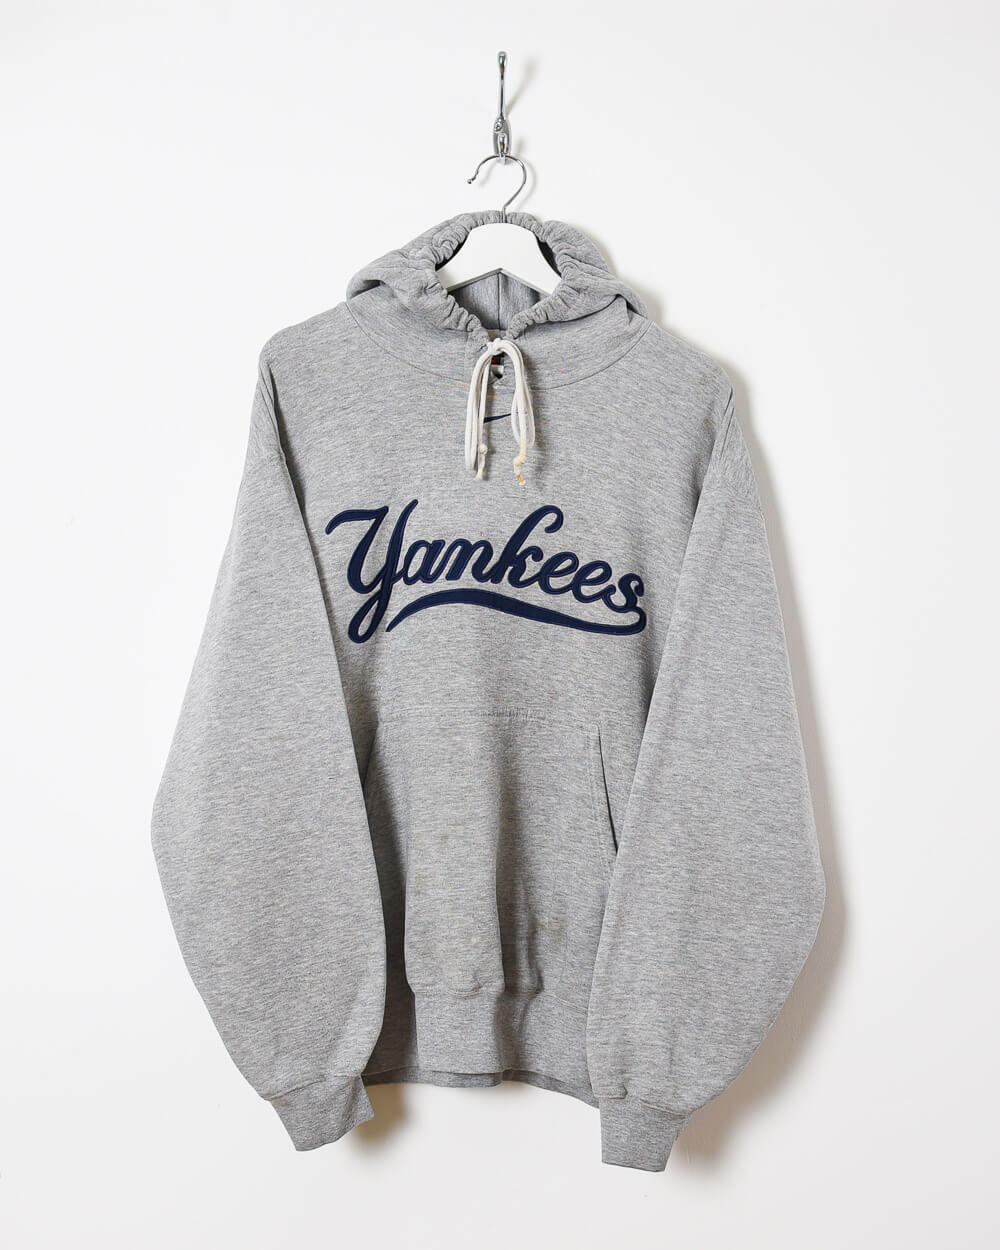 Nike Yankees Hoodie - Large - Domno Vintage 90s, 80s, 00s Retro and Vintage Clothing 